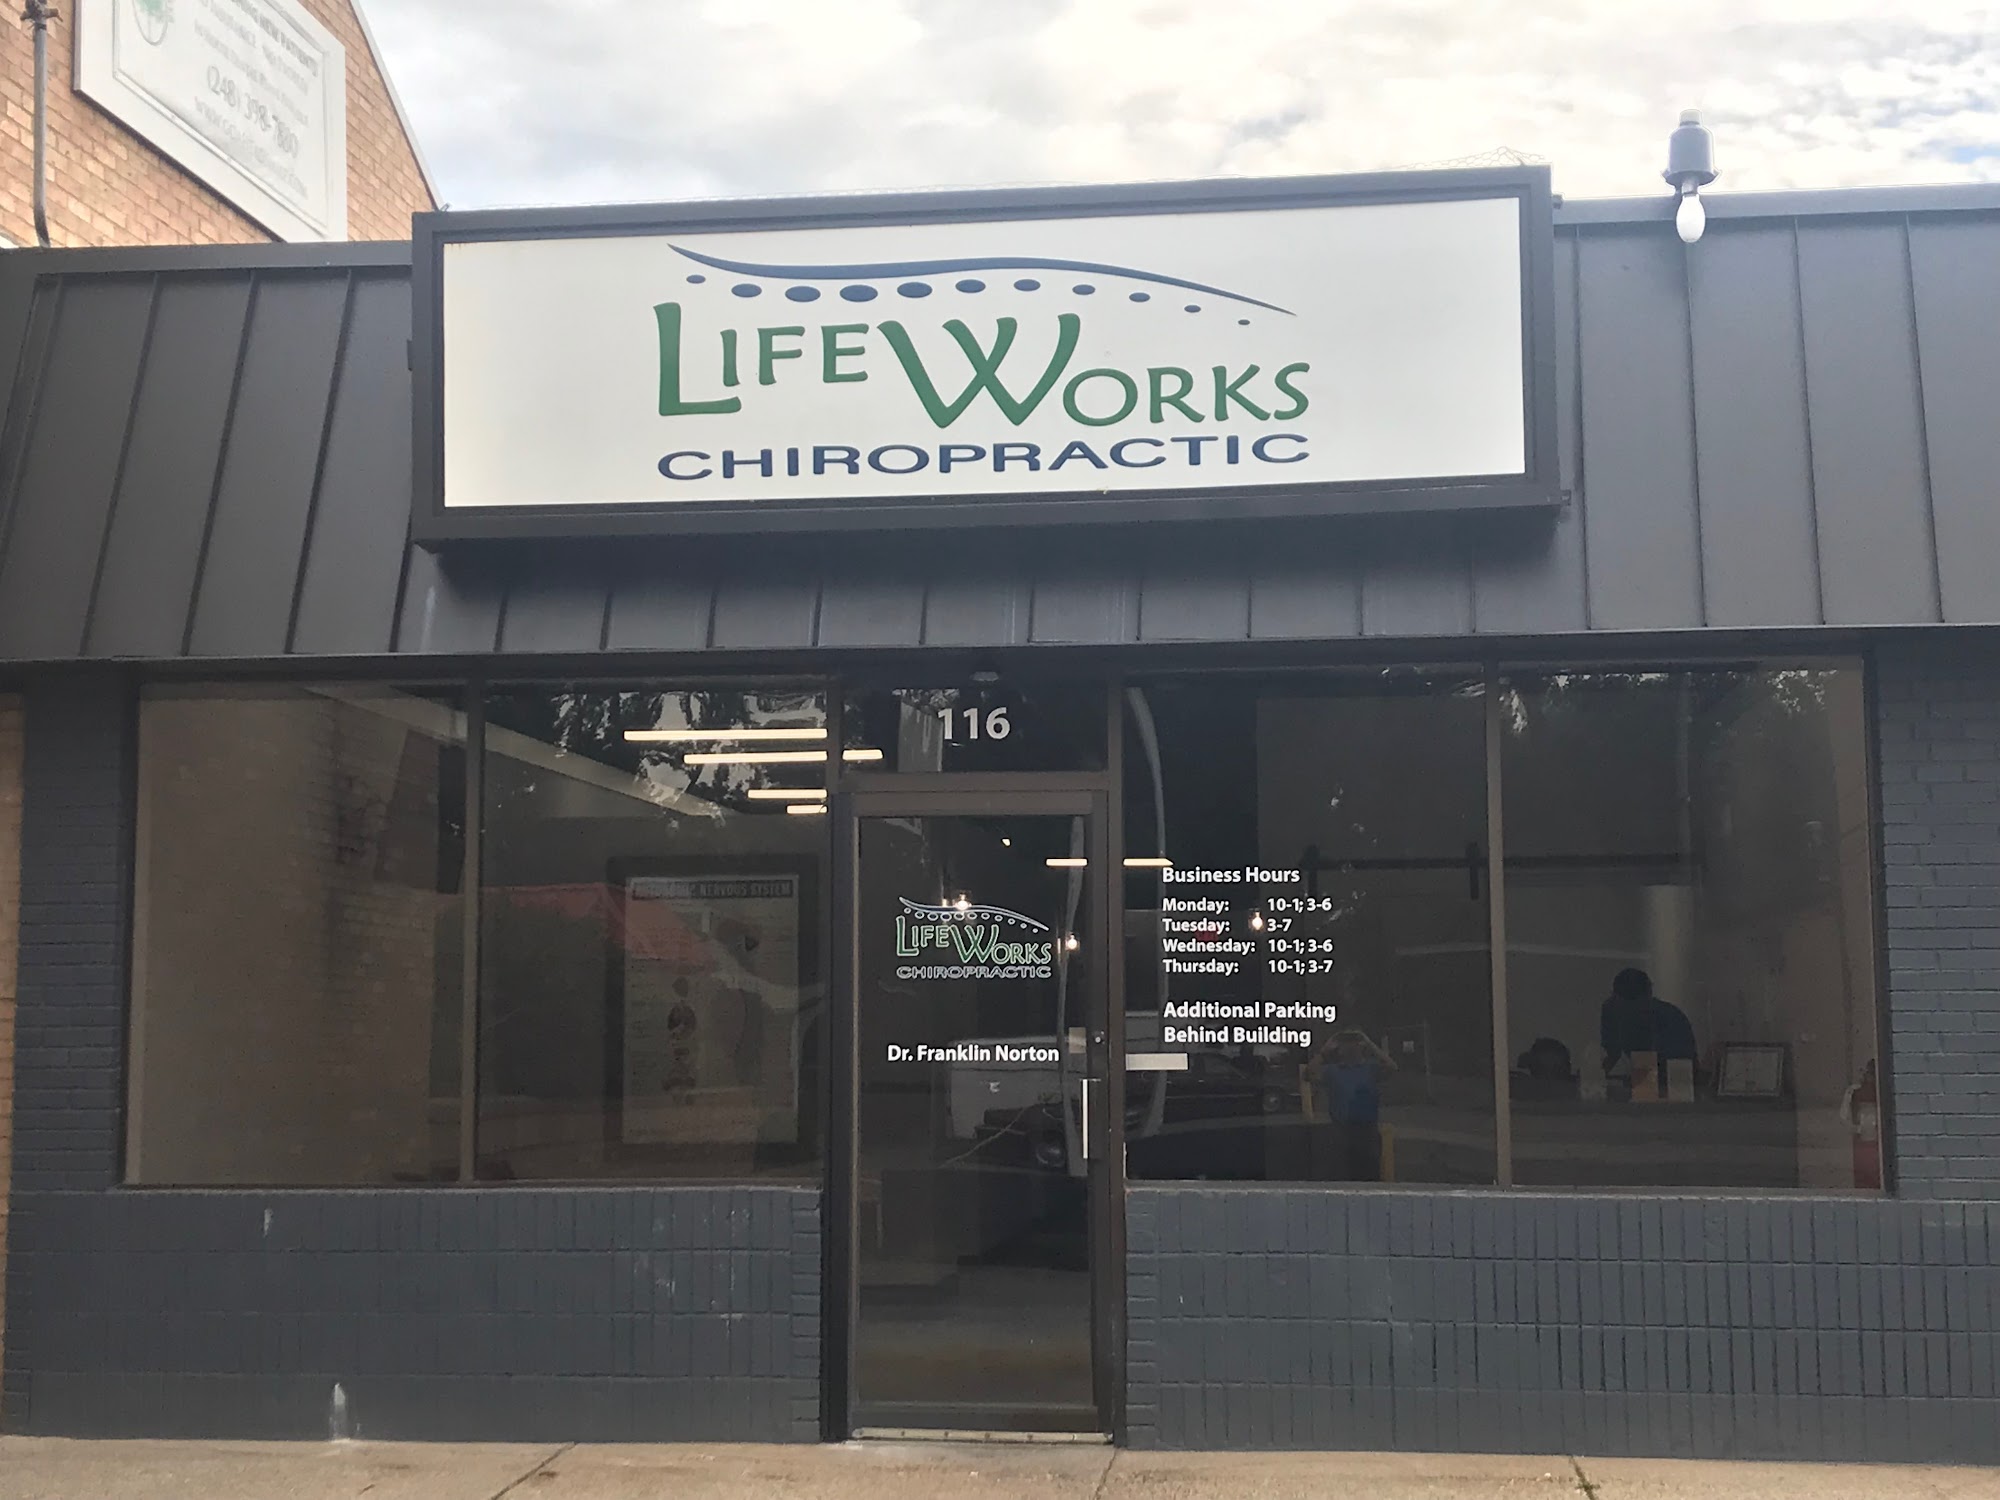 LifeWorks Chiropractic